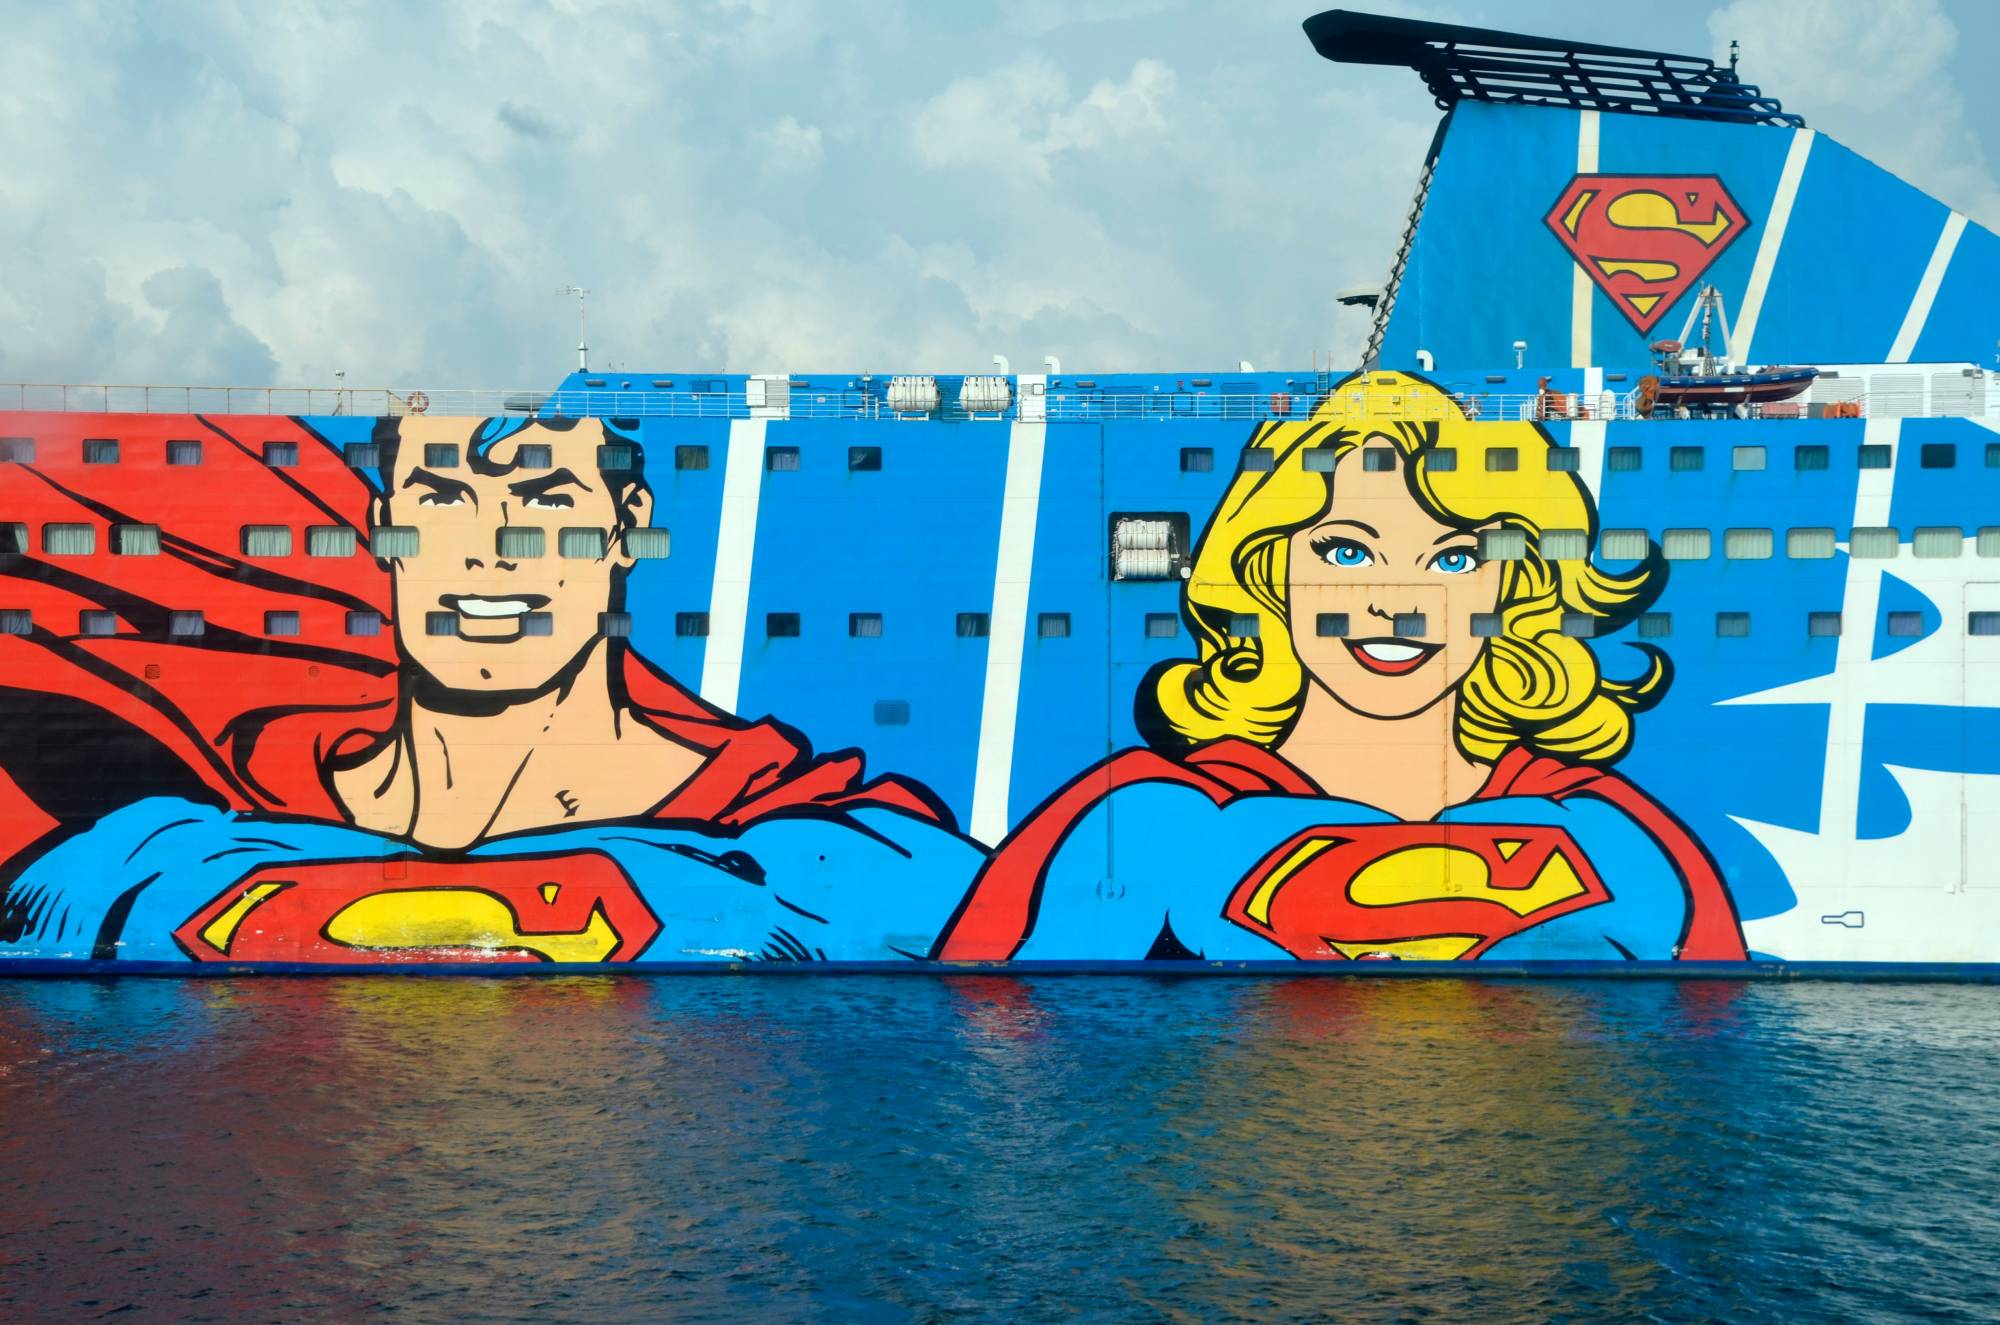 Ship with superhero